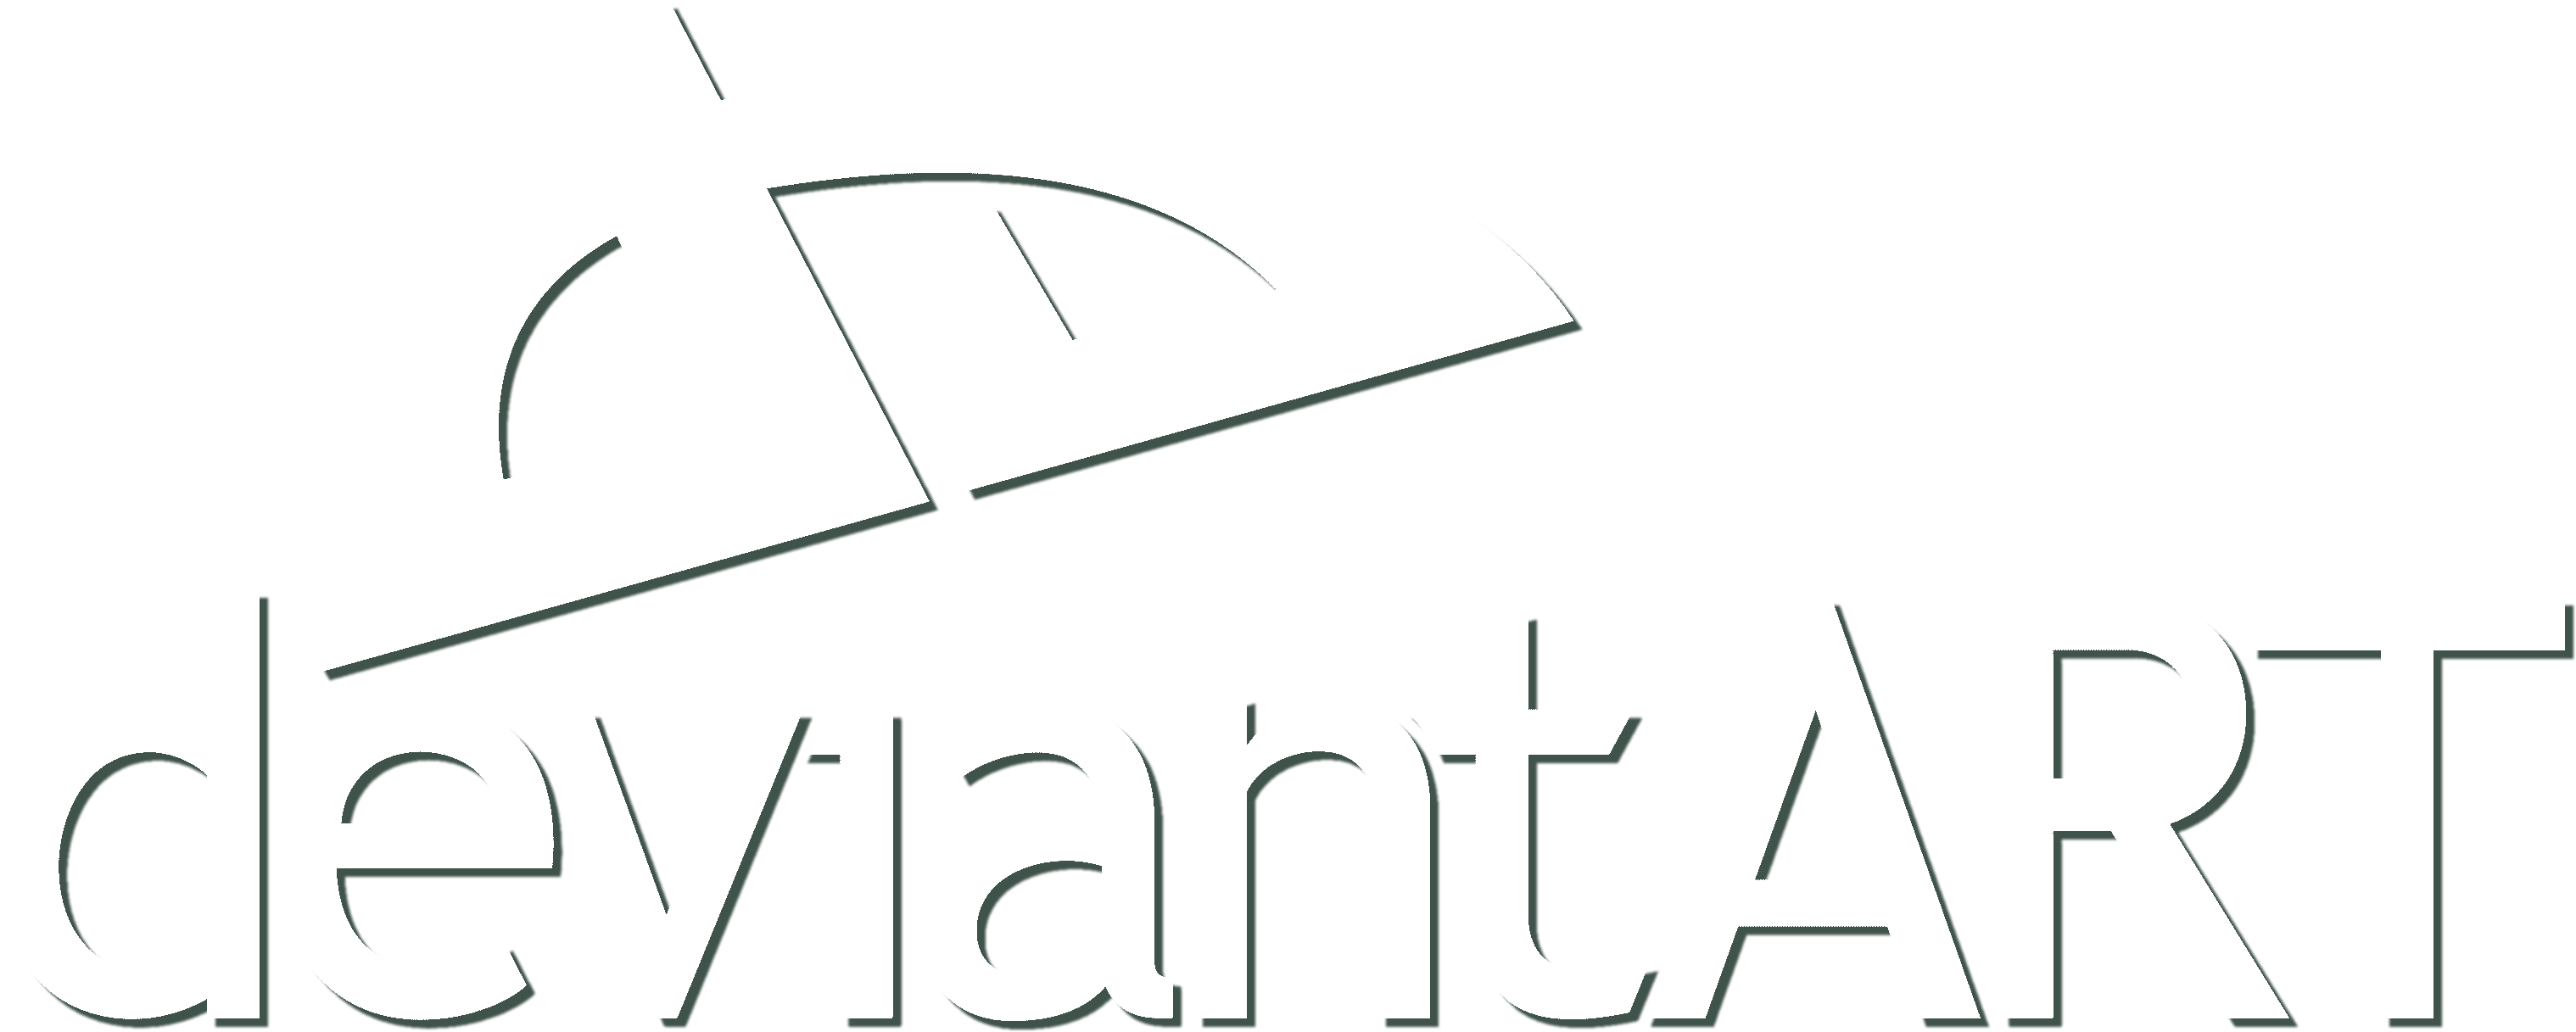 old deviantart logo